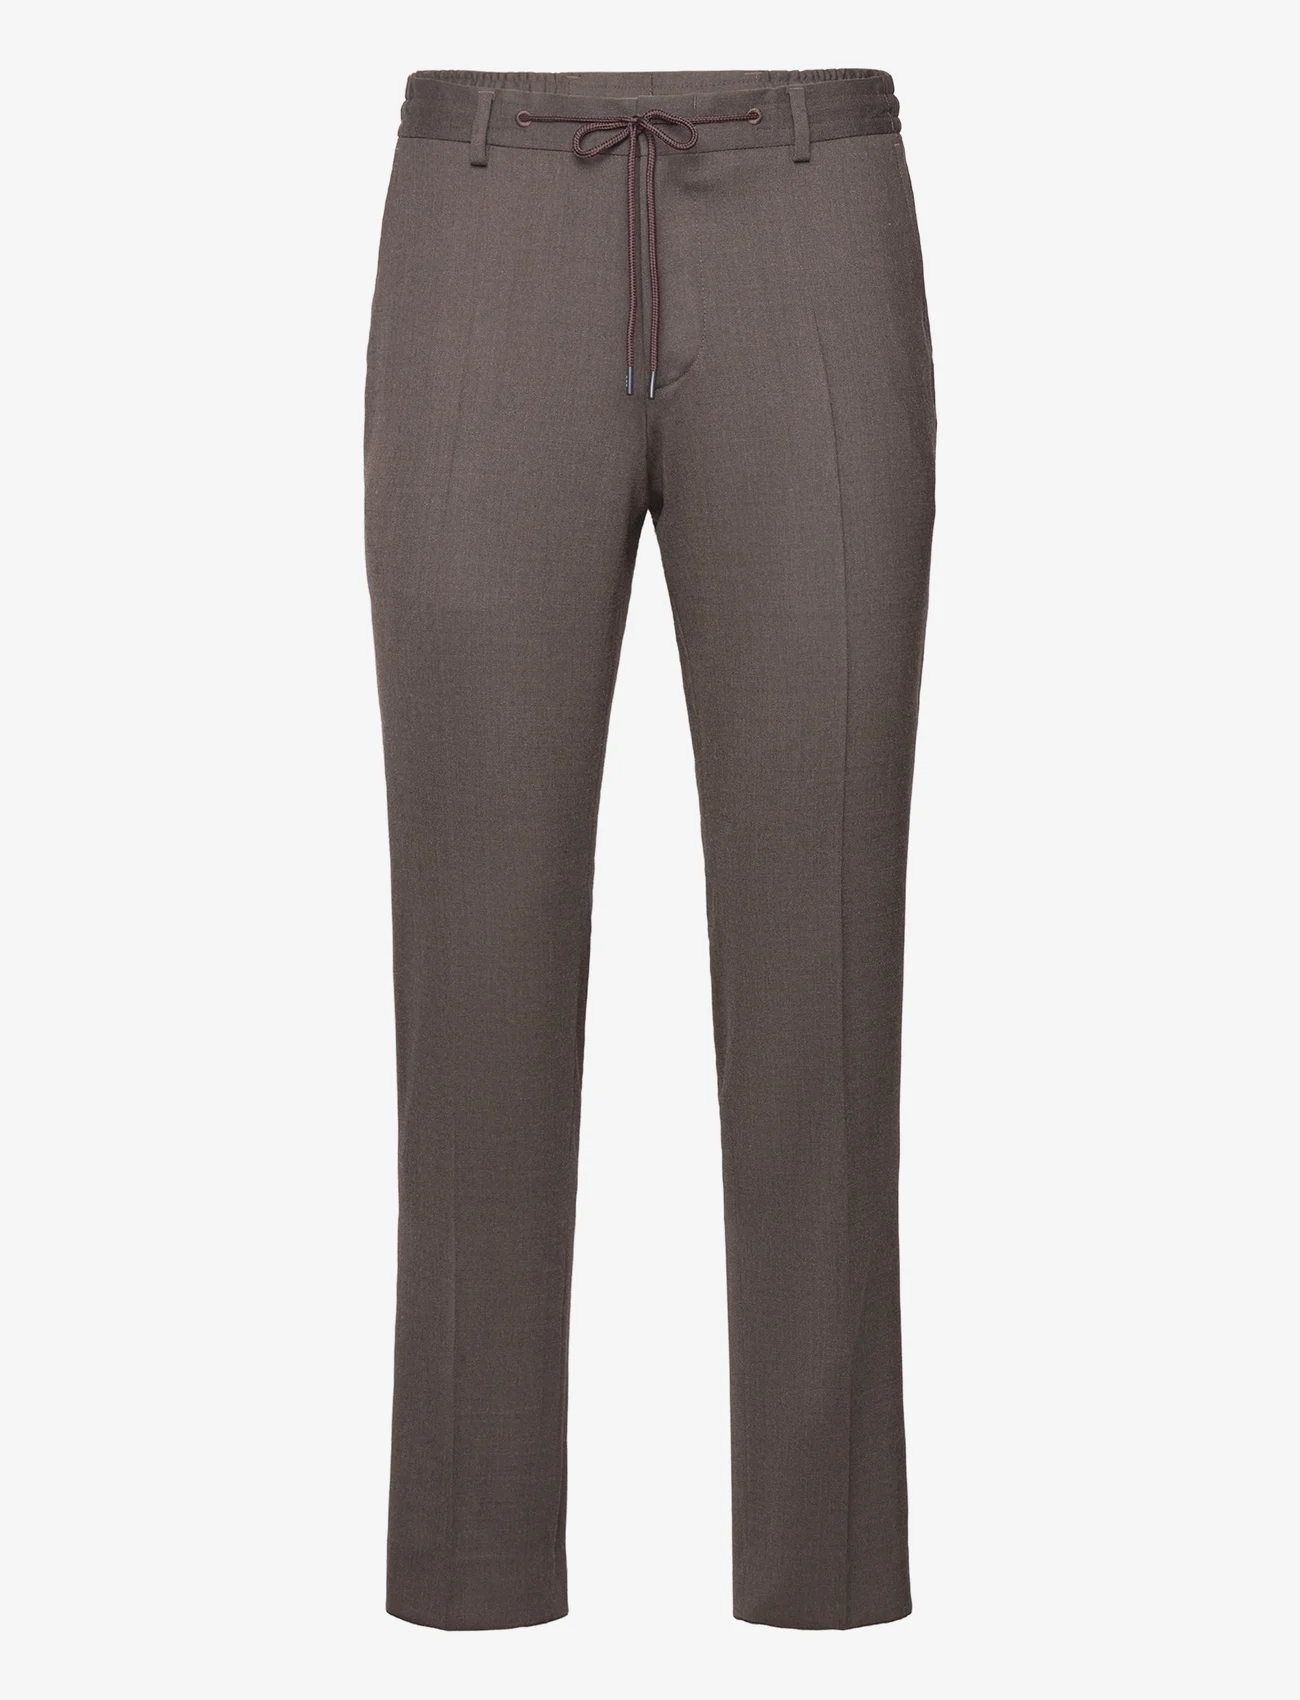 Michael Kors - FLANNEL PANT - kostiumo kelnės - brown - 0